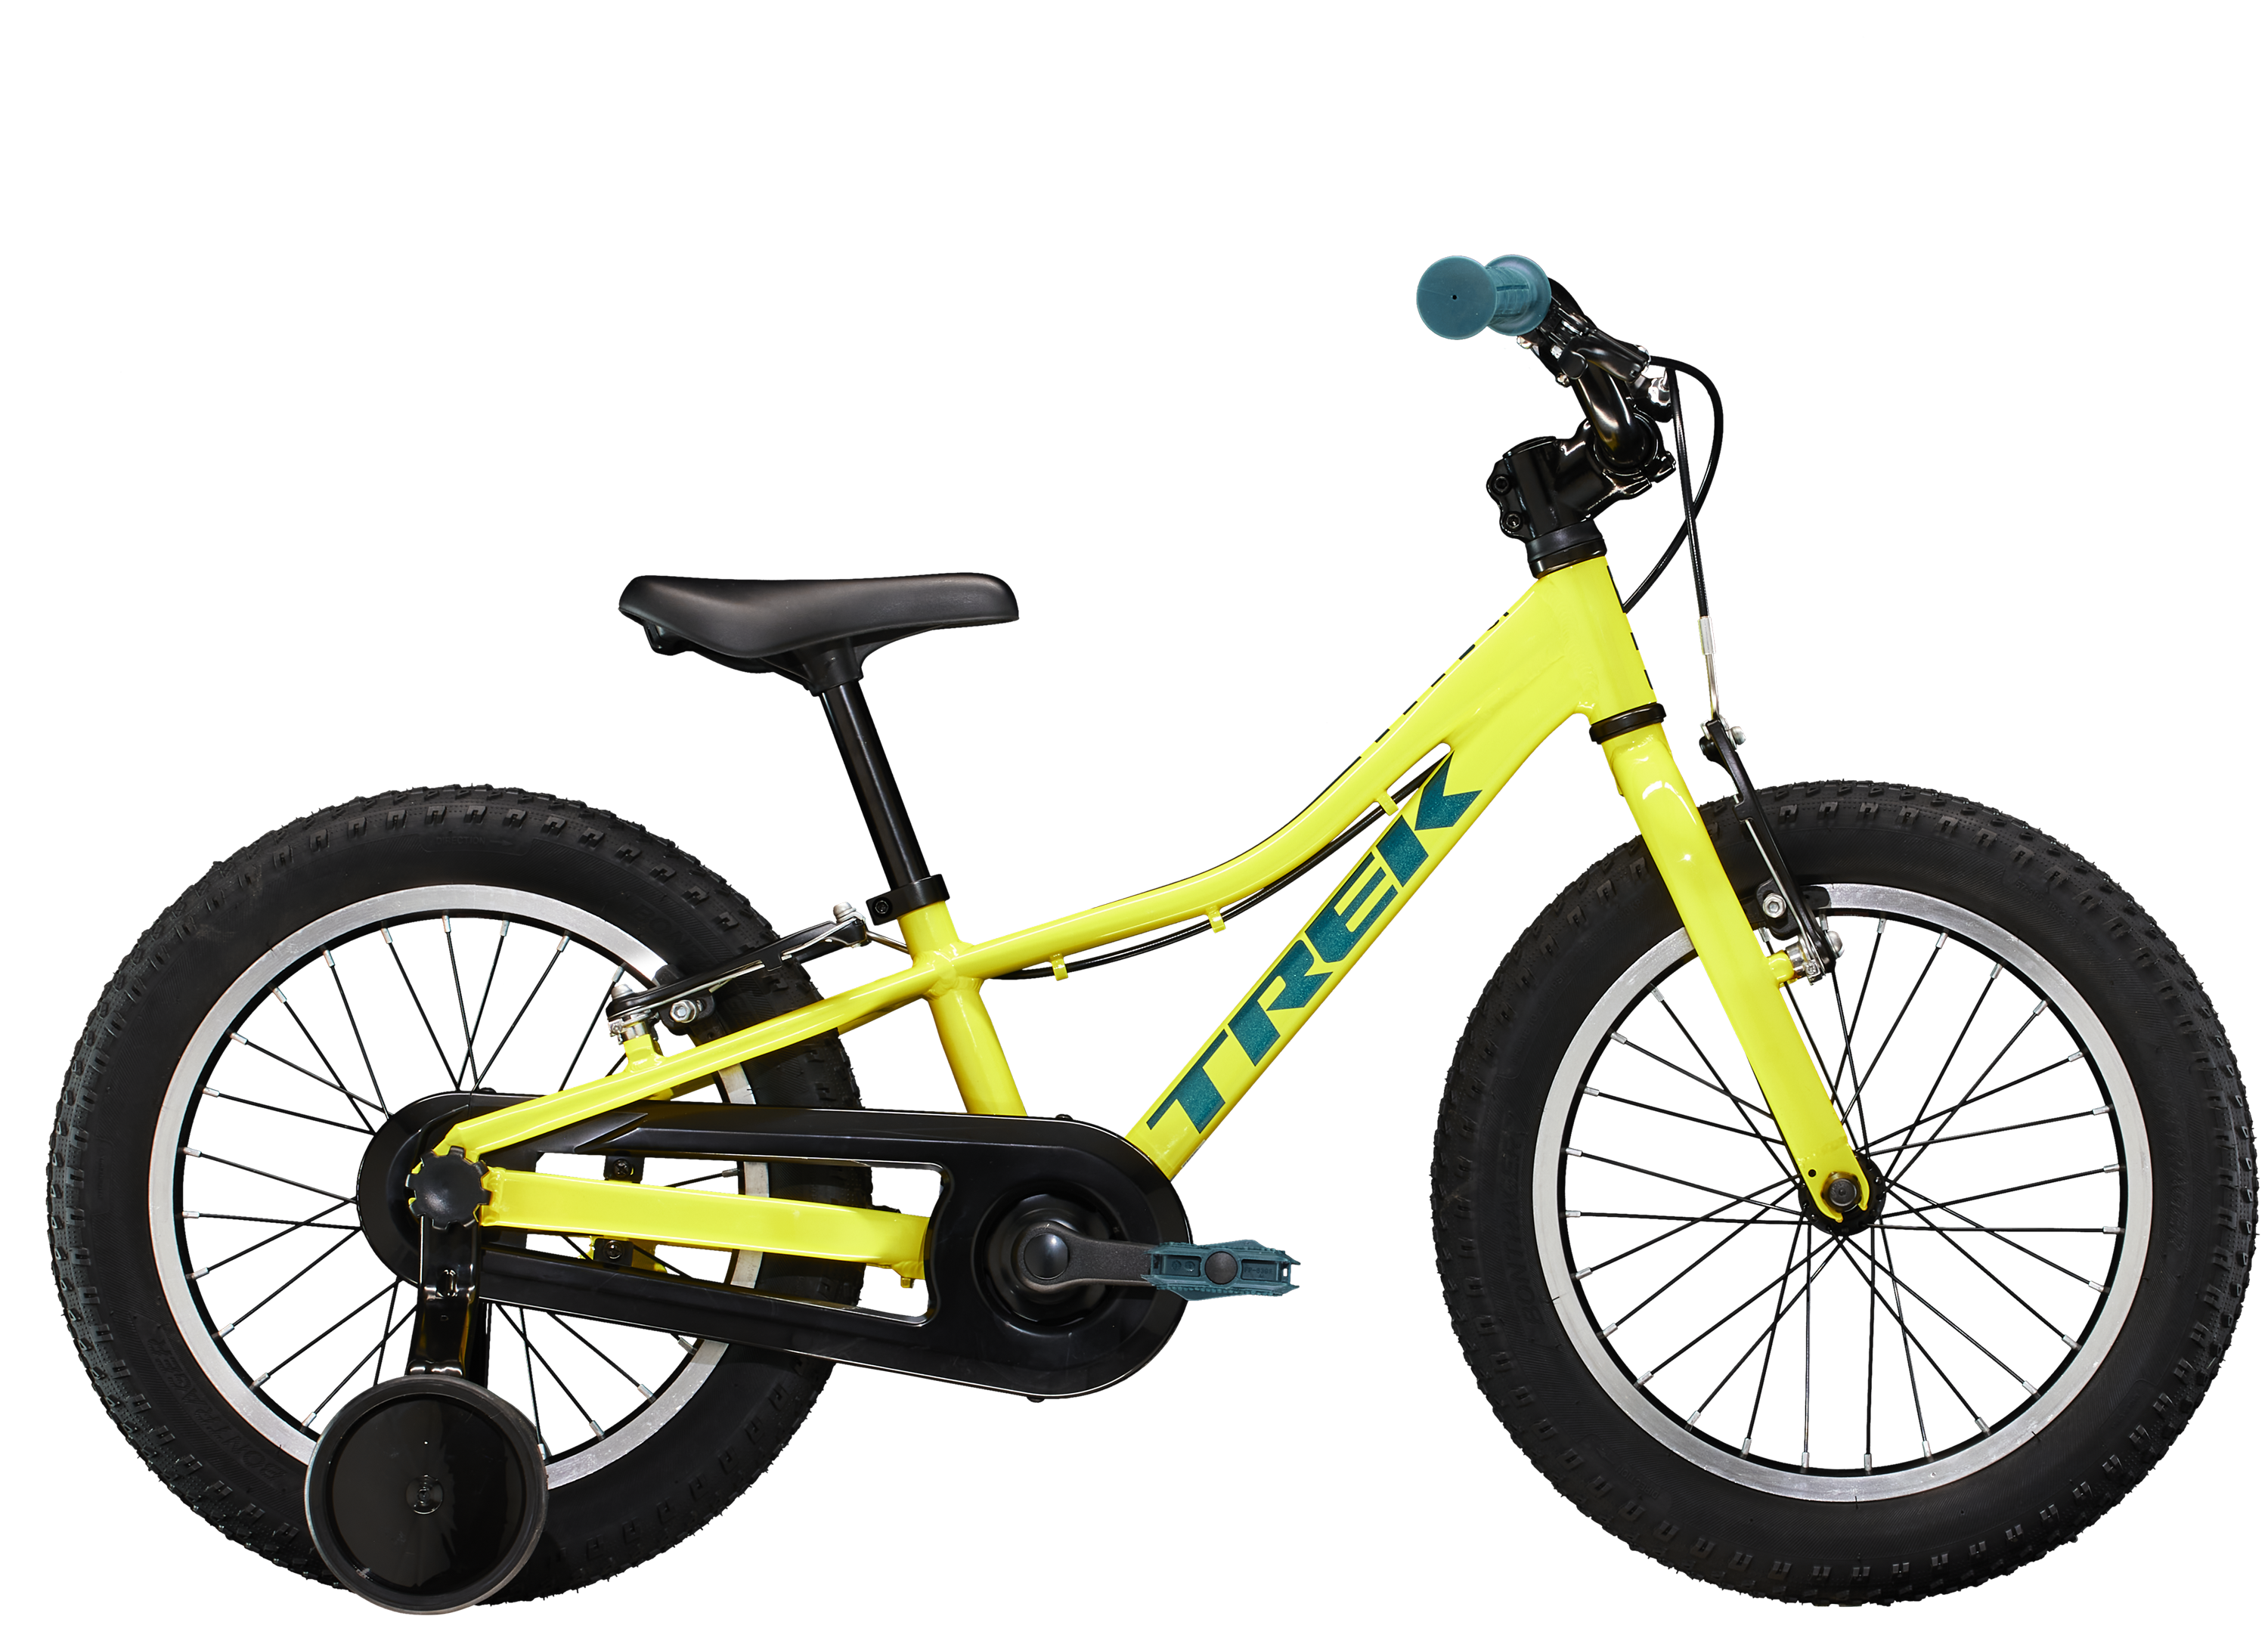 Precaliber 16- Trek Bikes- Trek Kids Bikes- Best Selling Kids Bikes